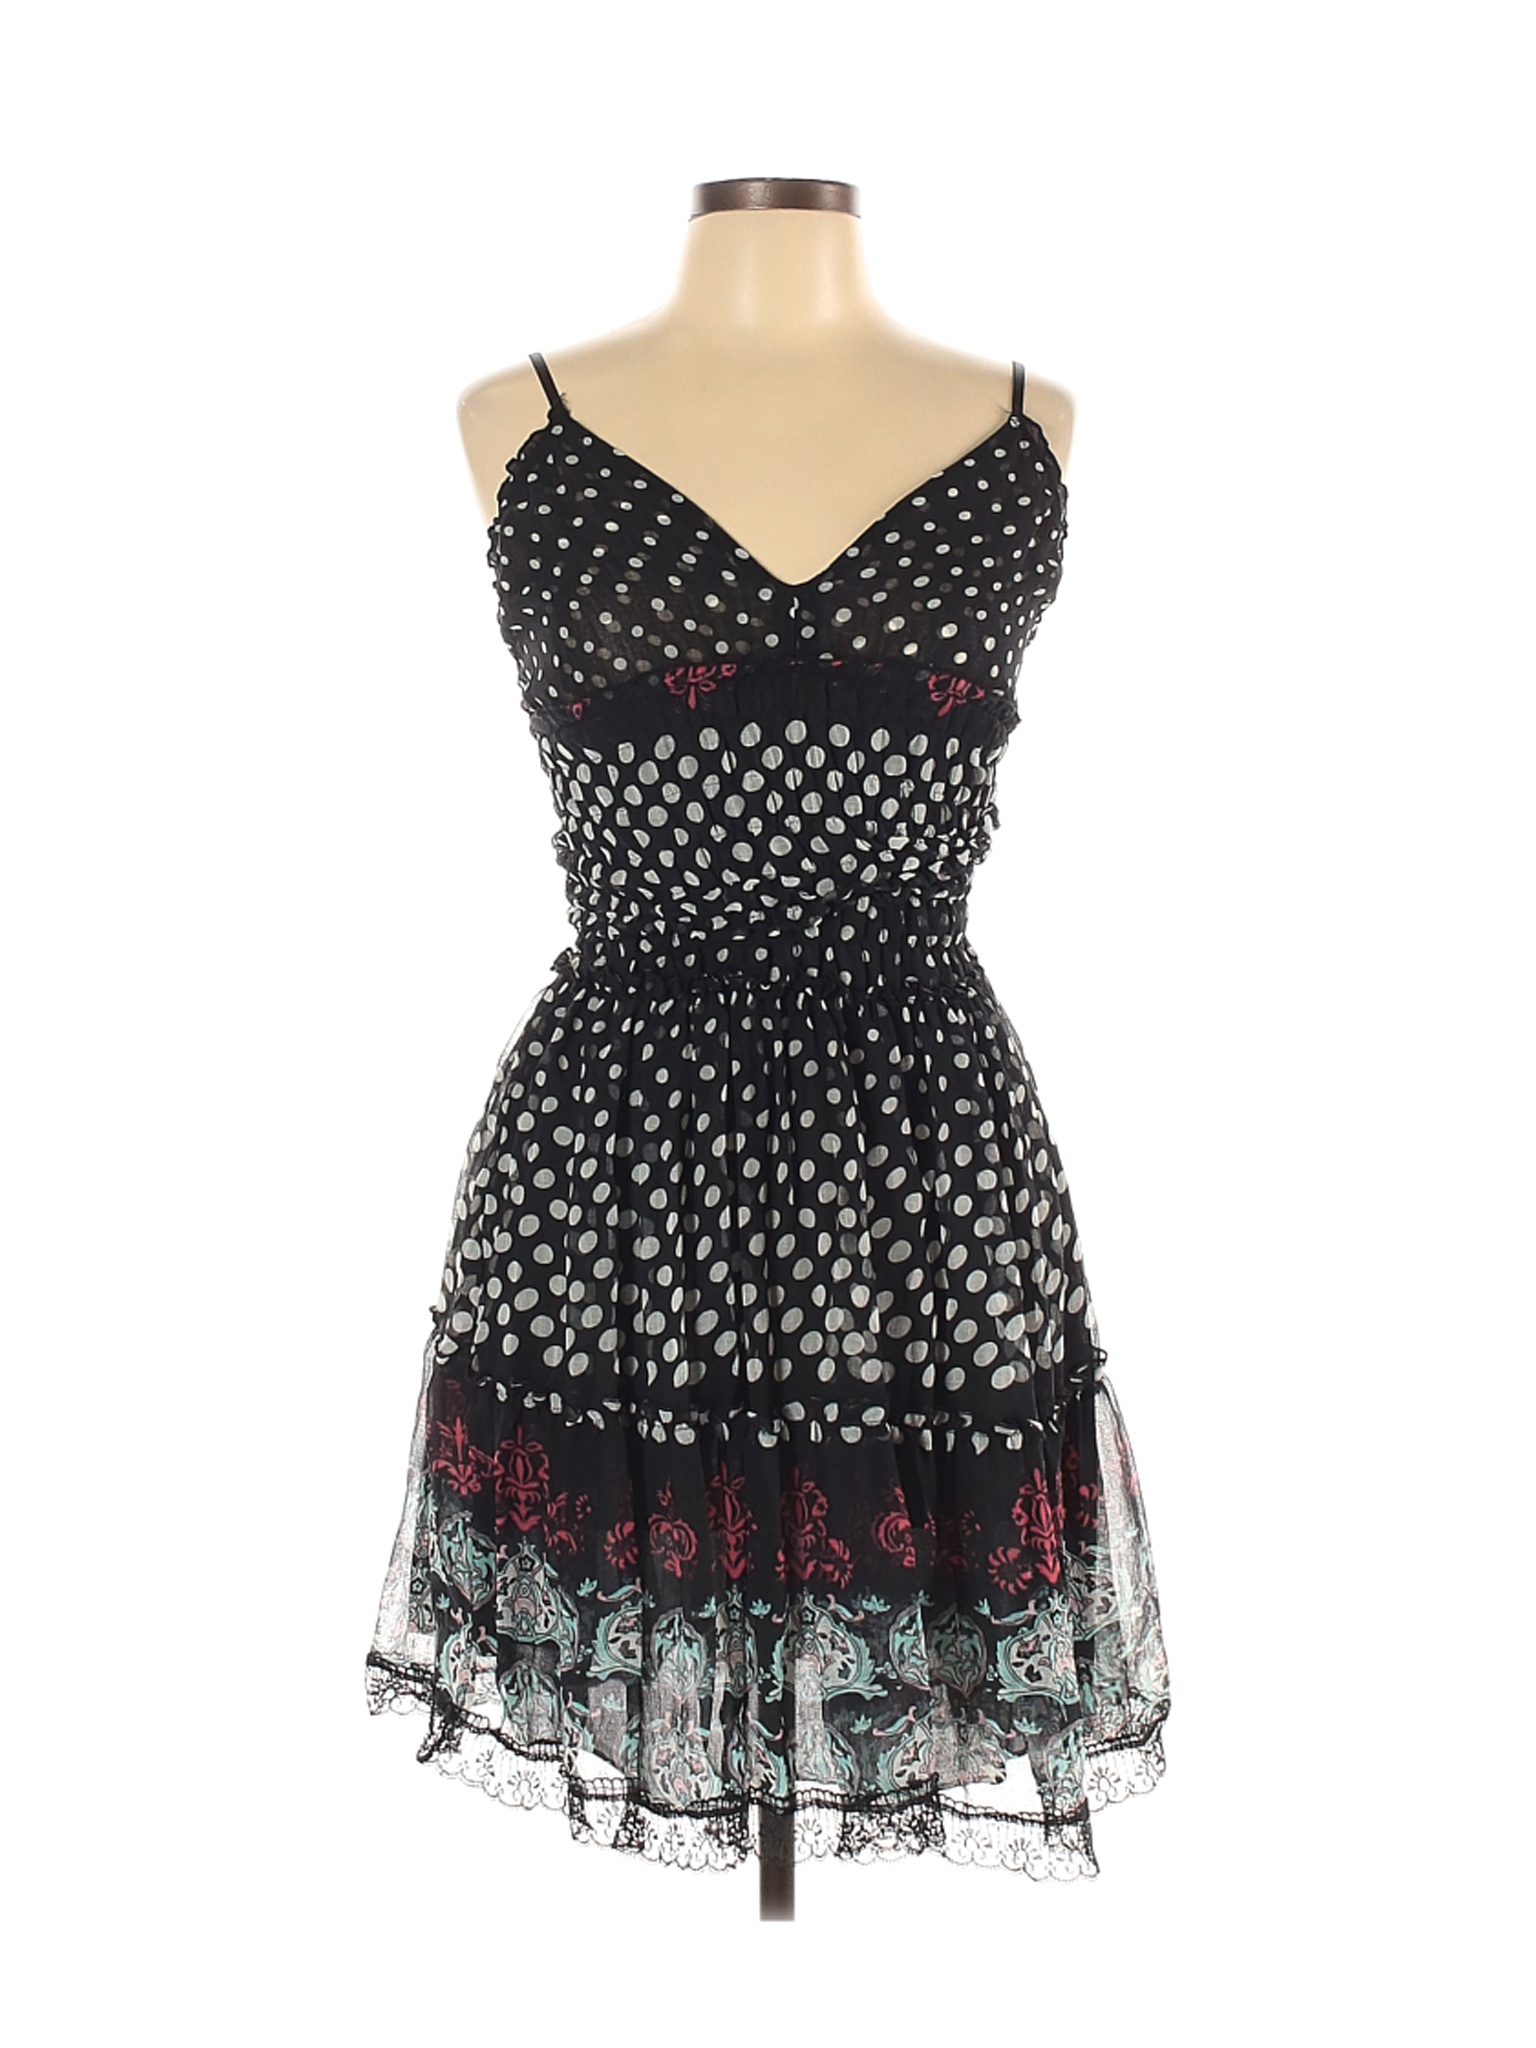 NWT Assorted Brands Women Black Cocktail Dress L | eBay